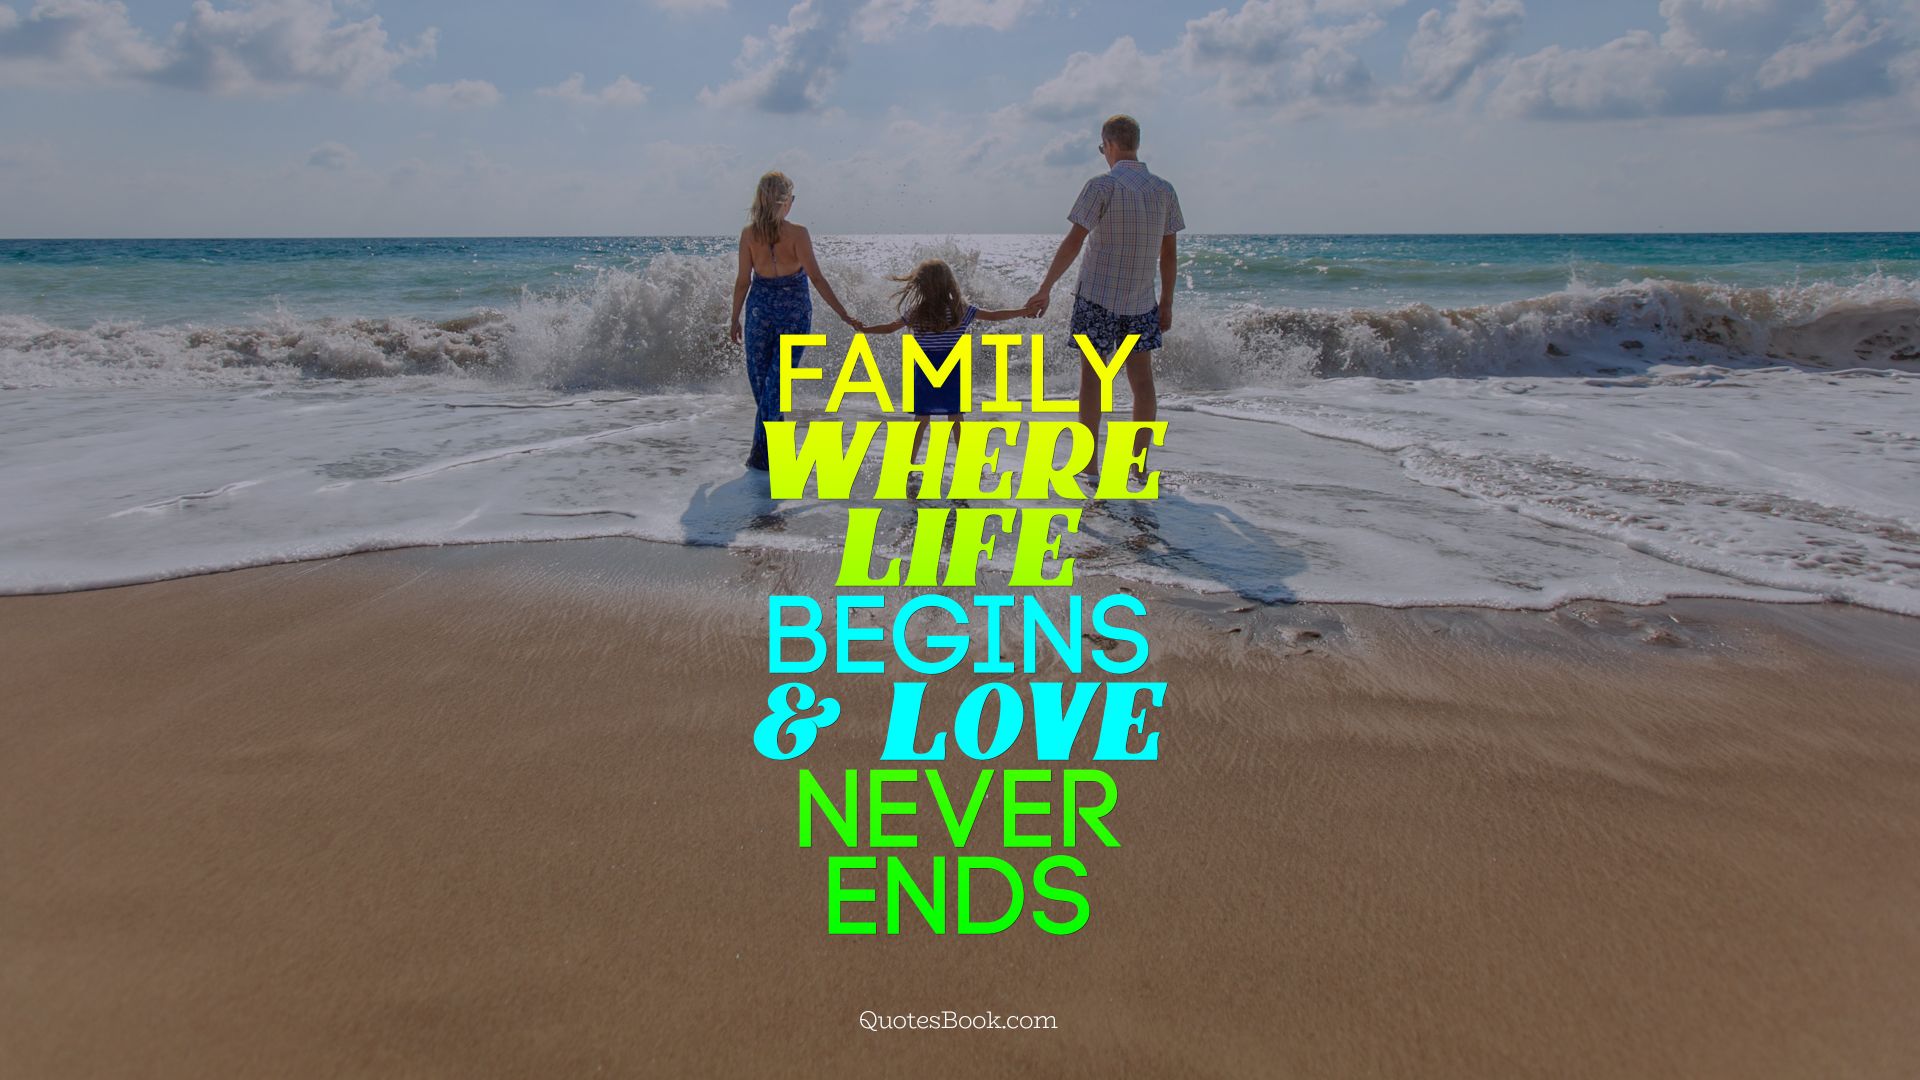 Family where life begins & love never ends